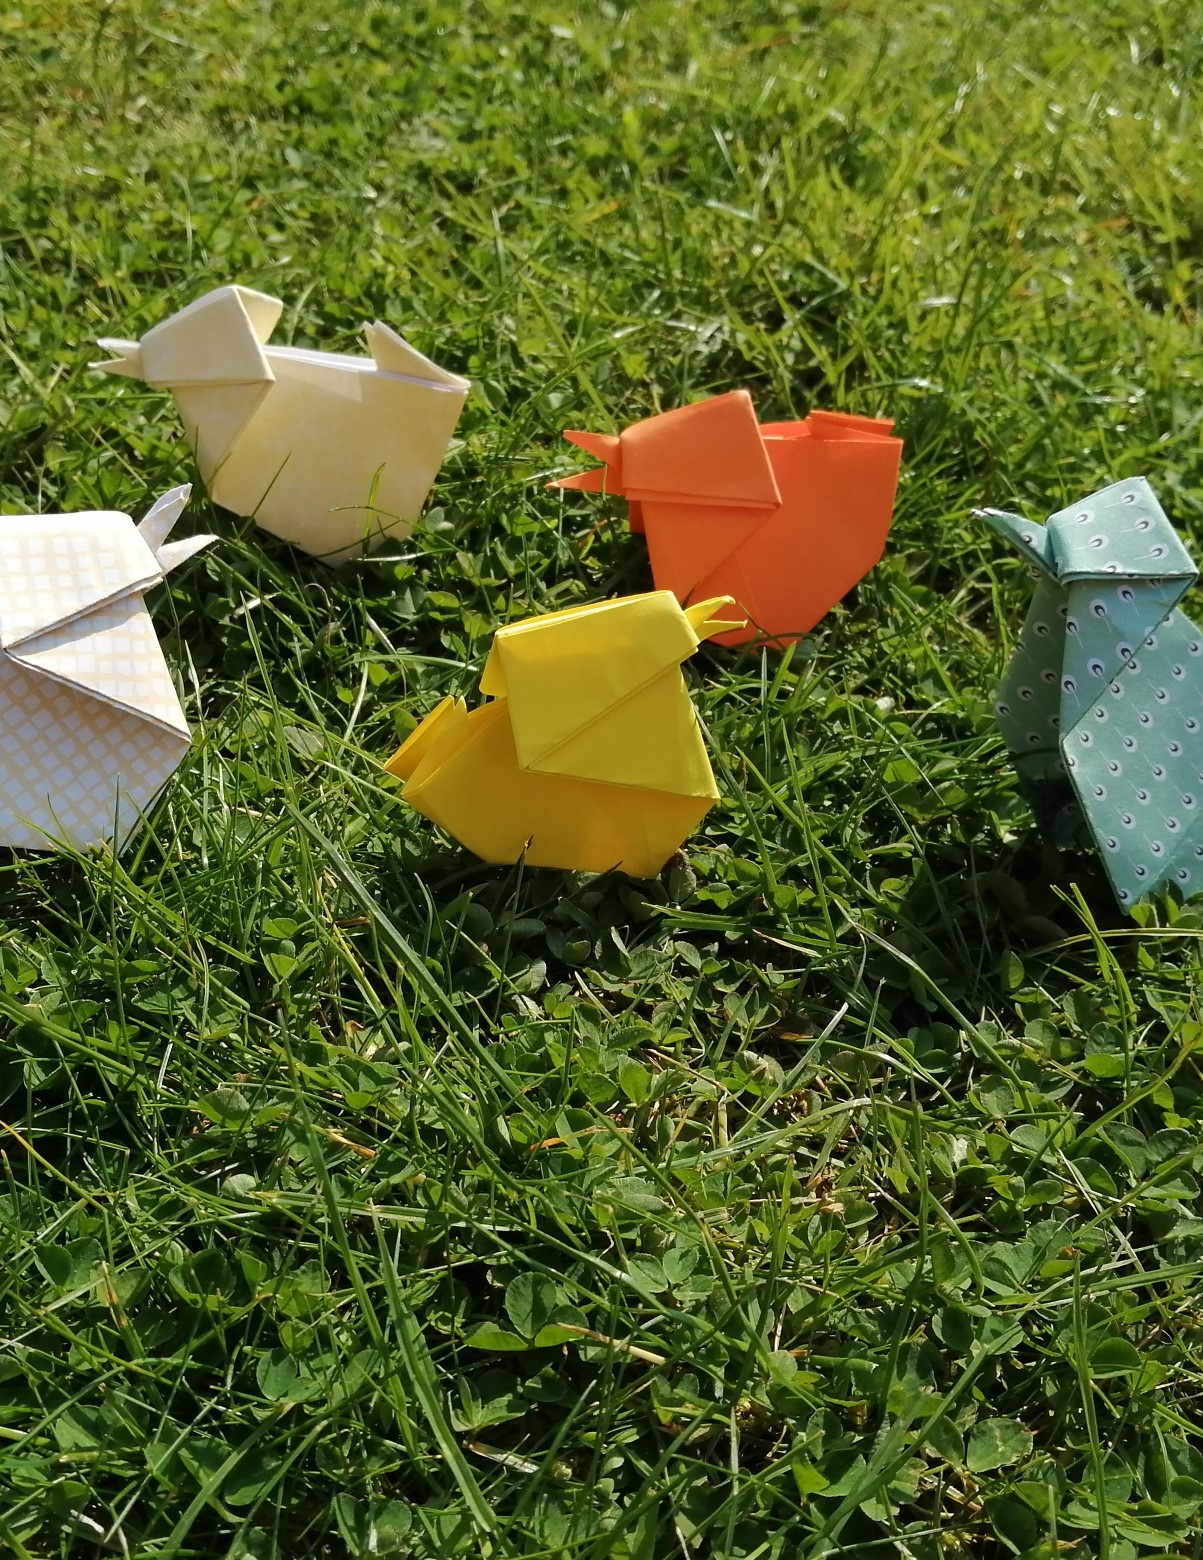 skills origami ducks on grass